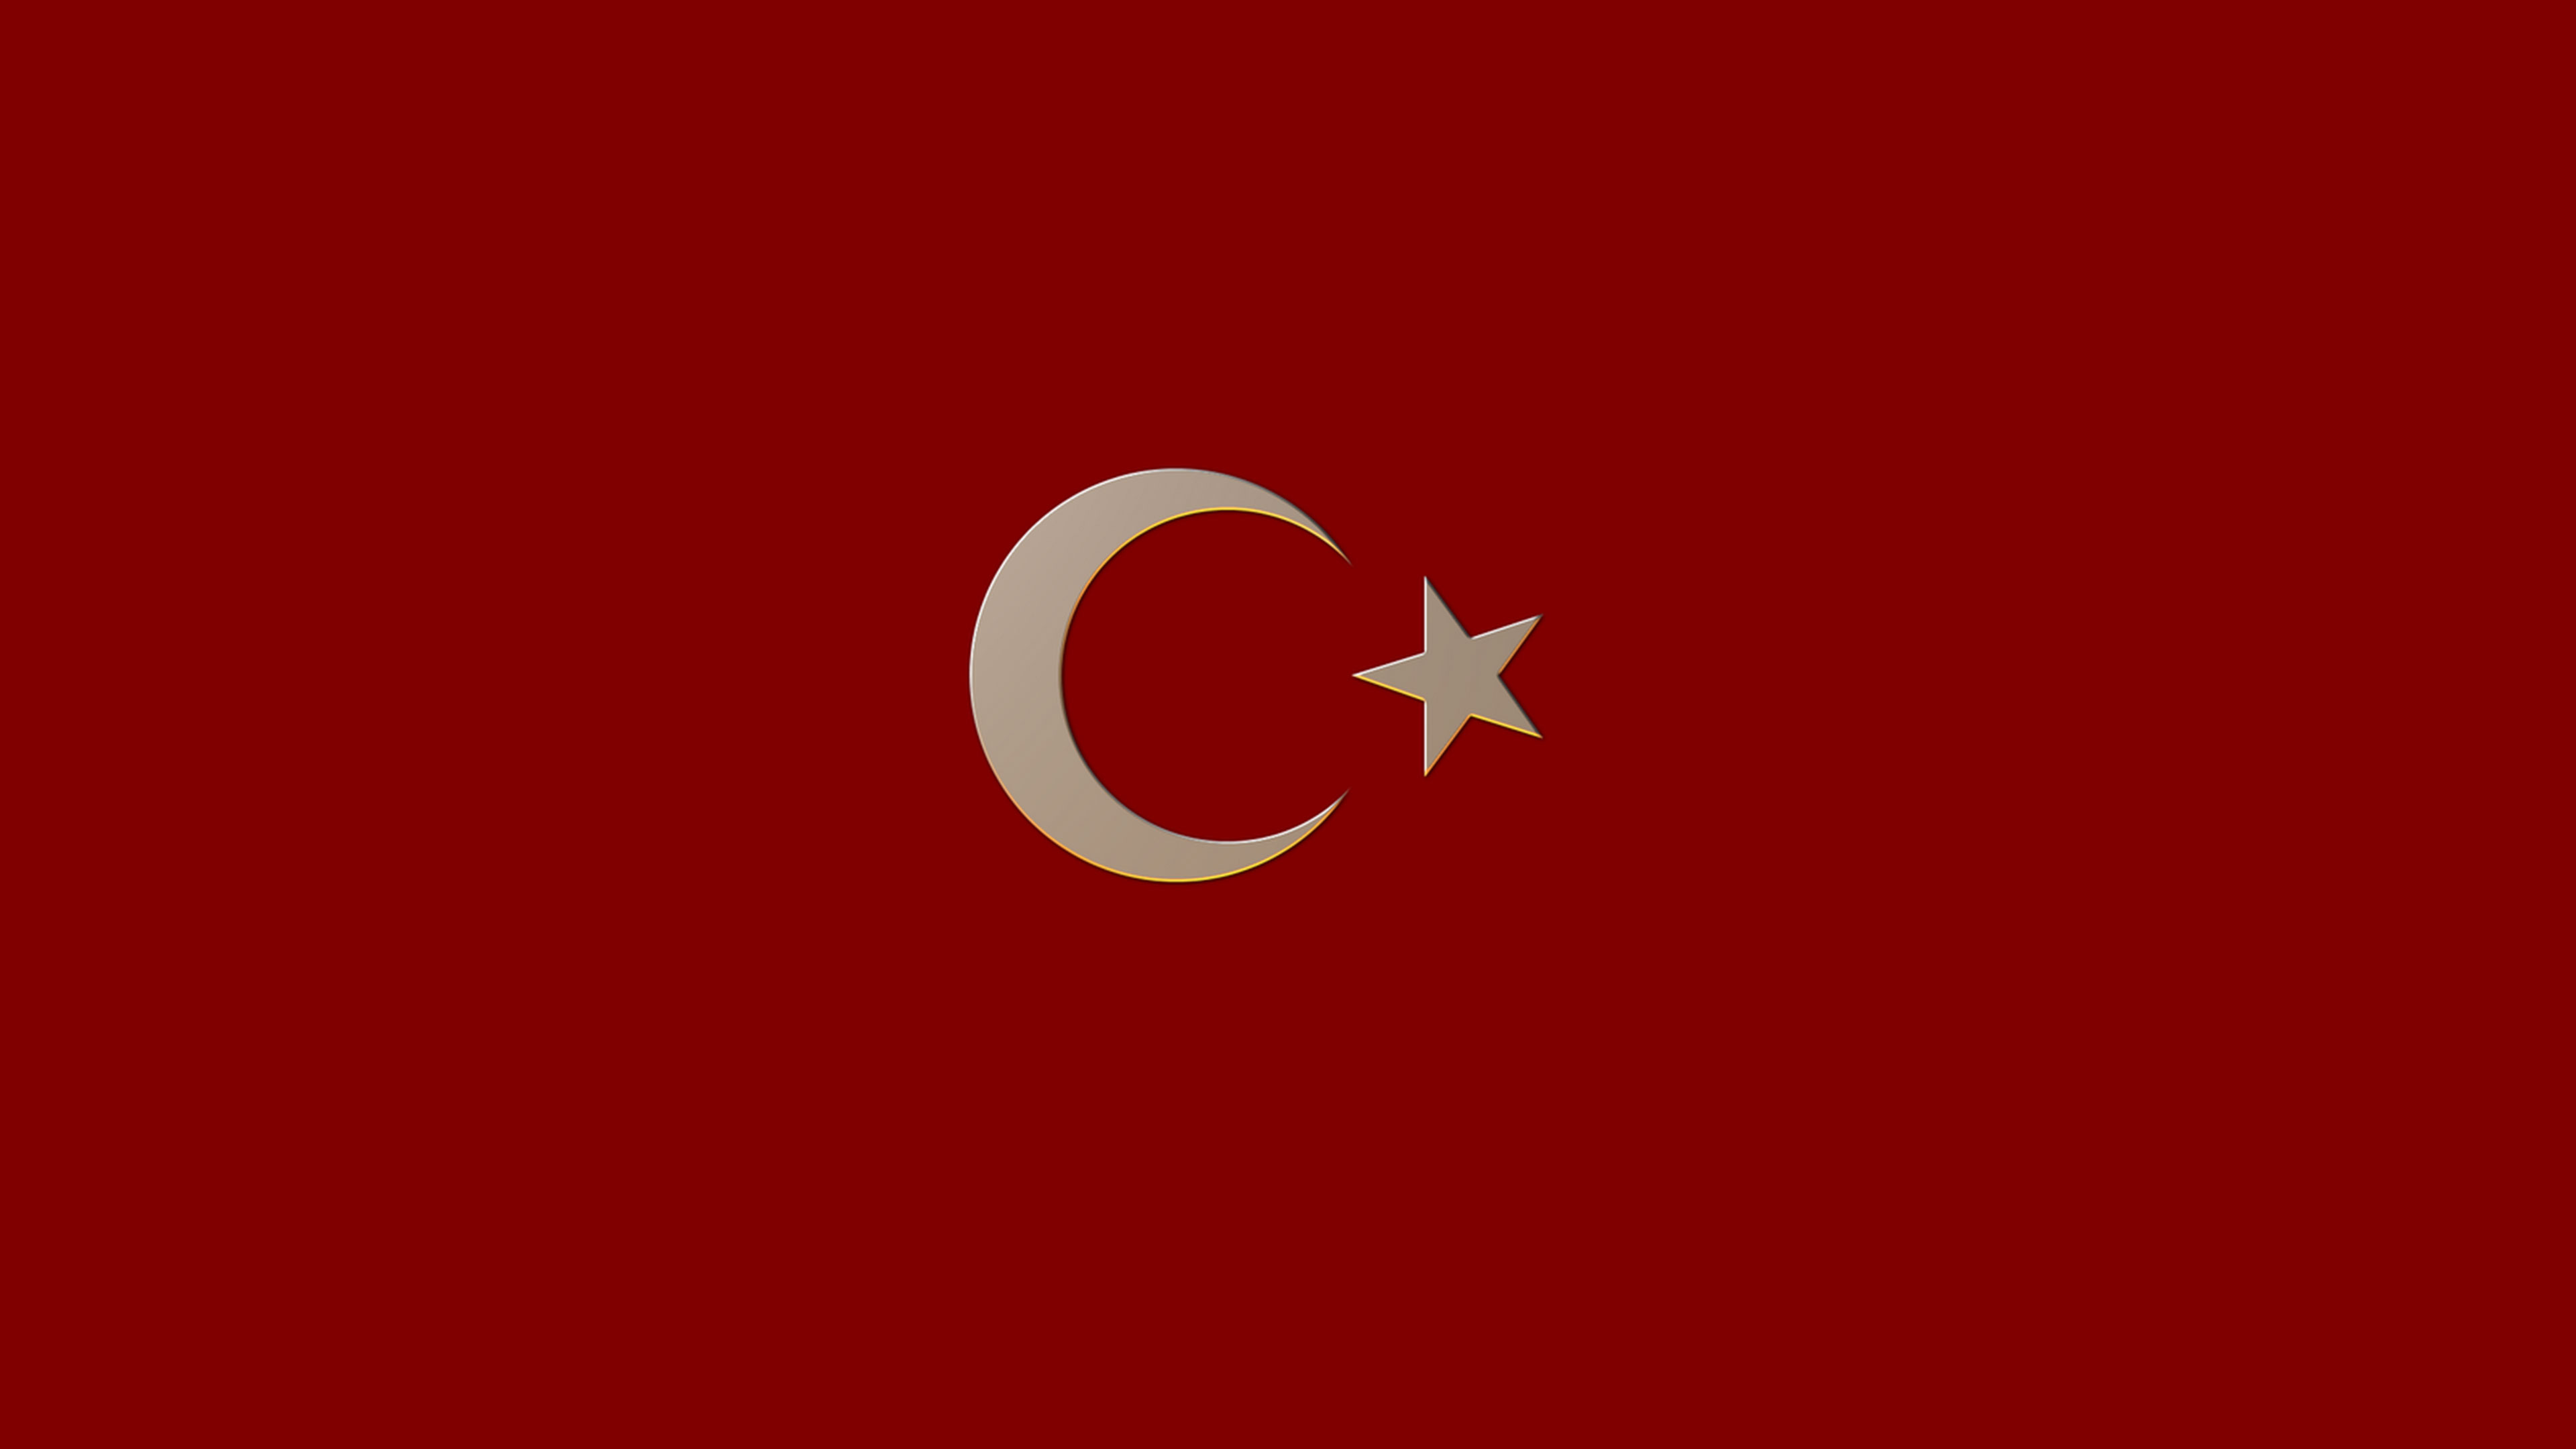 4k ultrahd turk bayraklari resimleri 9